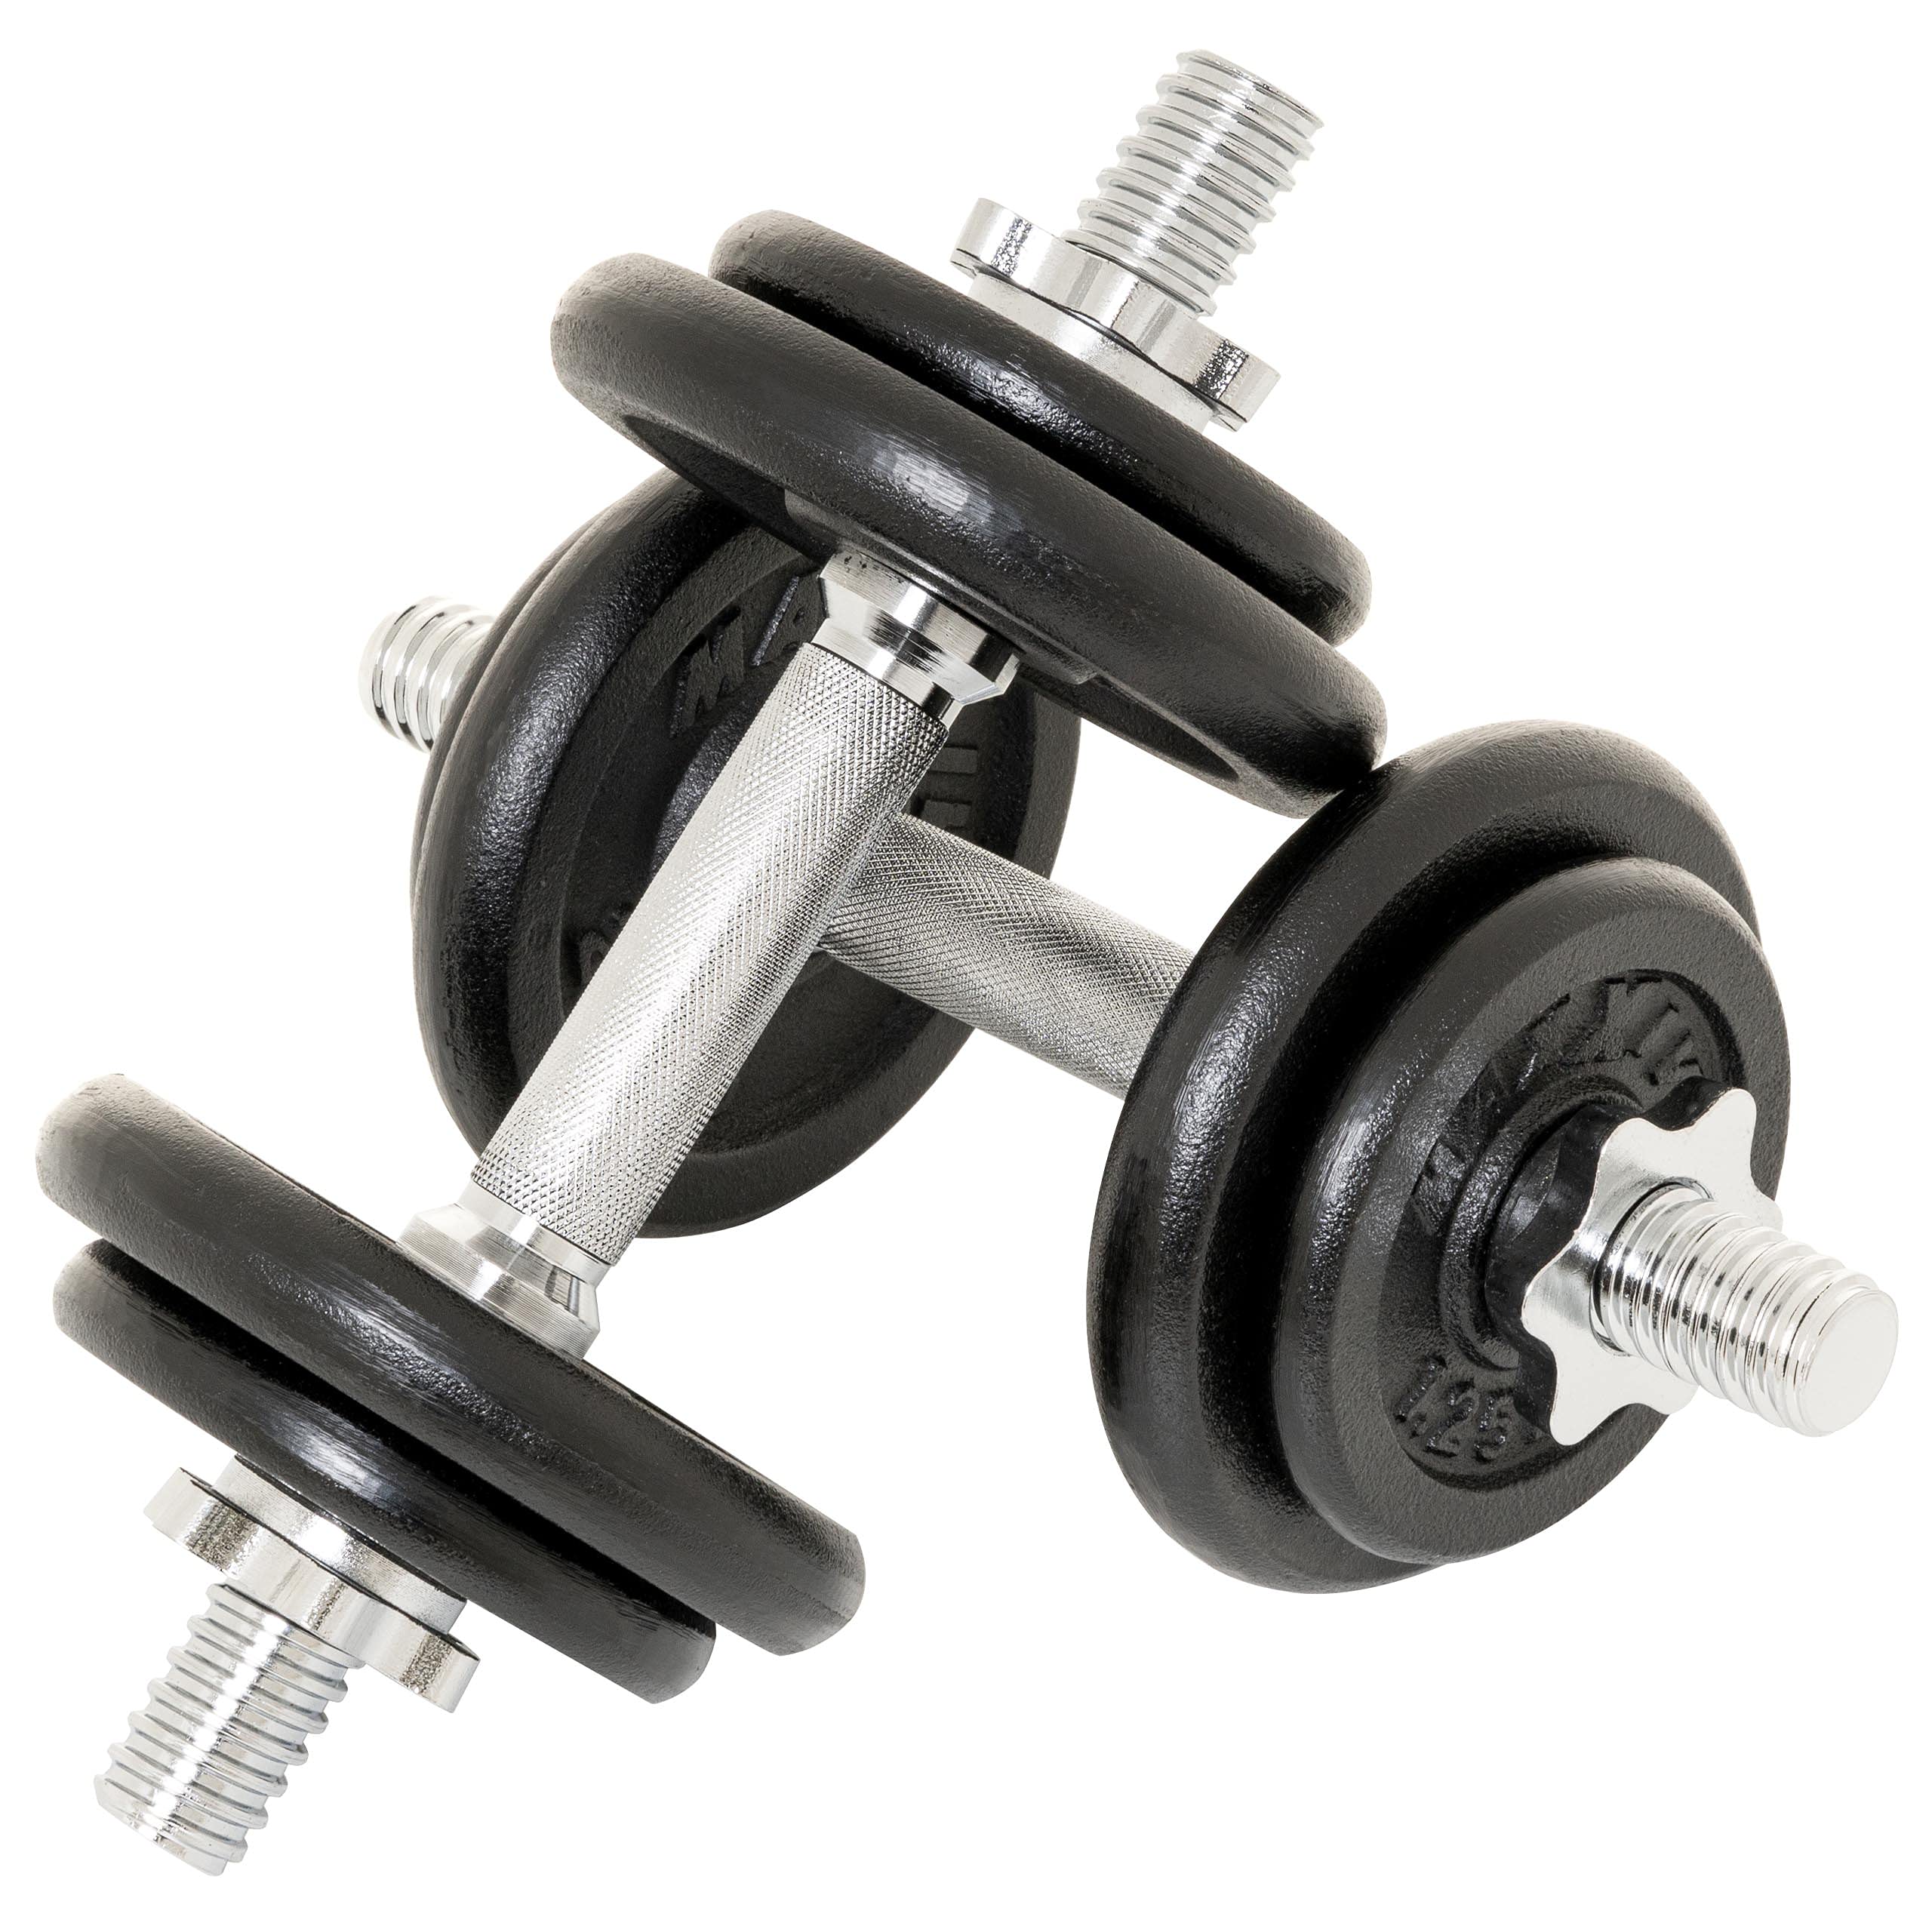 MAXXIVA® Kurzhantel-Set Gusseisen 2x10 kg 8 Gewichtsscheiben Sternverschluss Hantelset für Kraftsport Muskelaufbau Workouts Bodybuilding Reha 20 kg